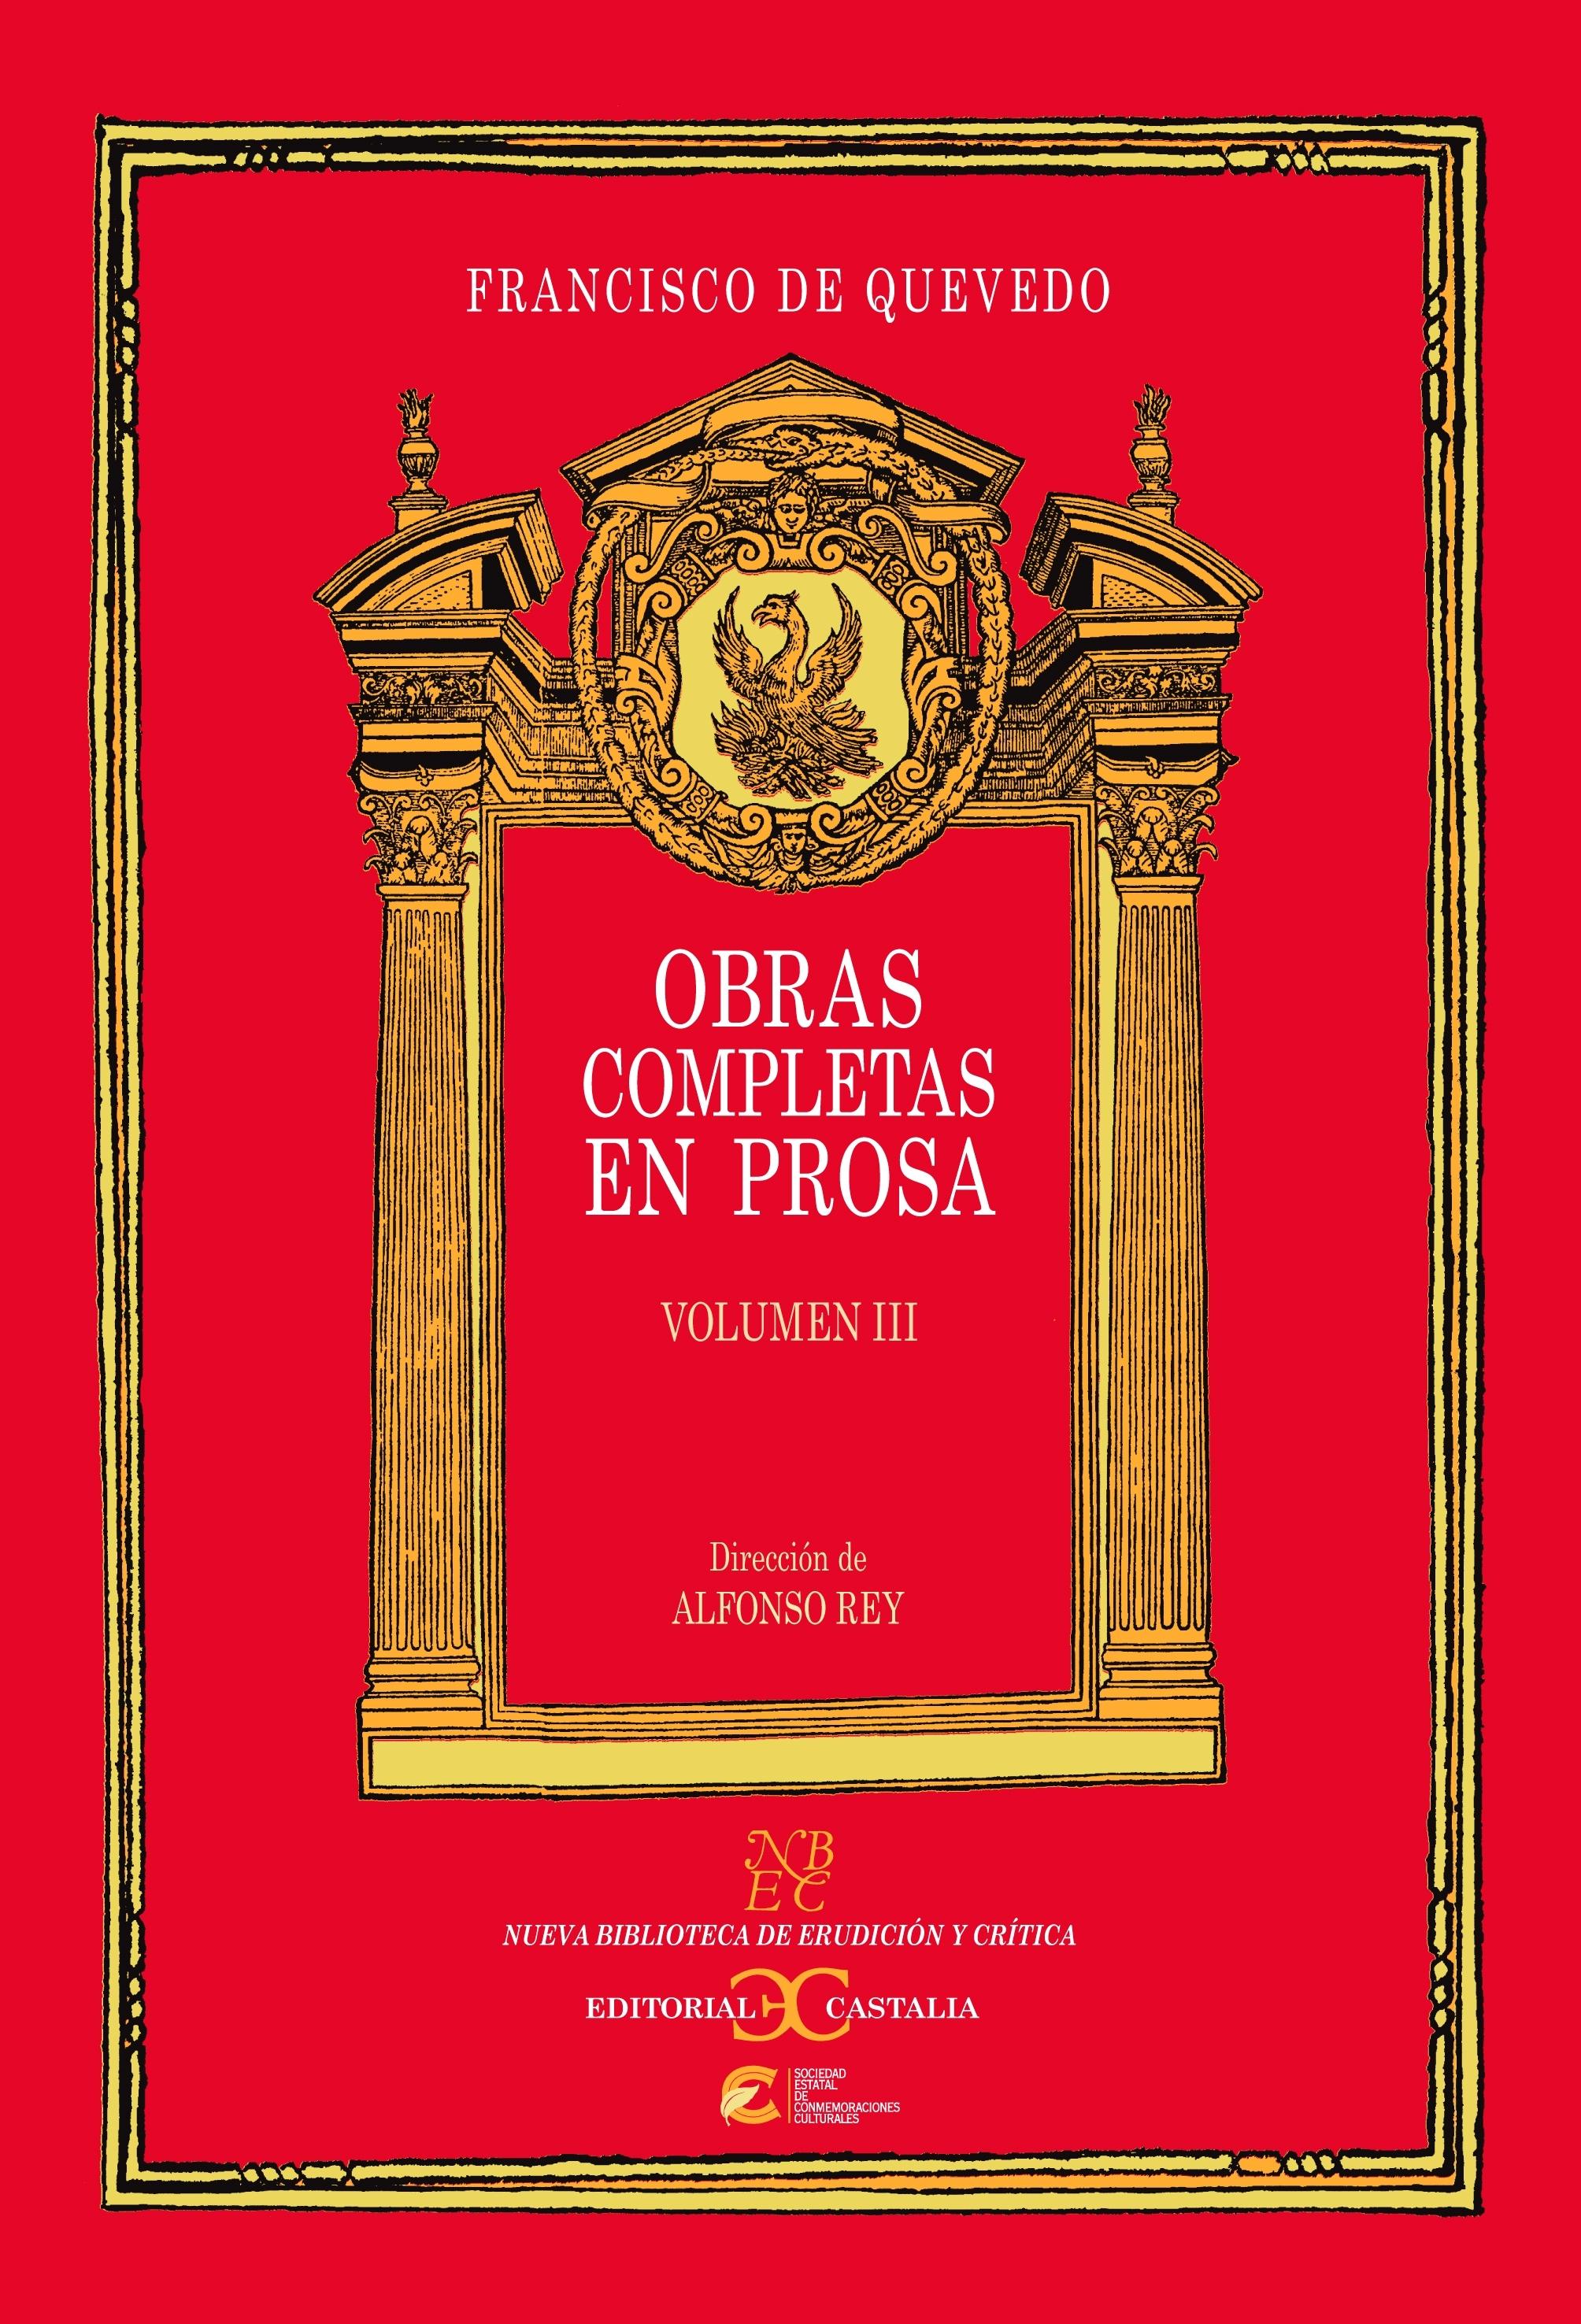 Obras completas en prosa - Volumen 3 "(Francisco de Quevedo)". 